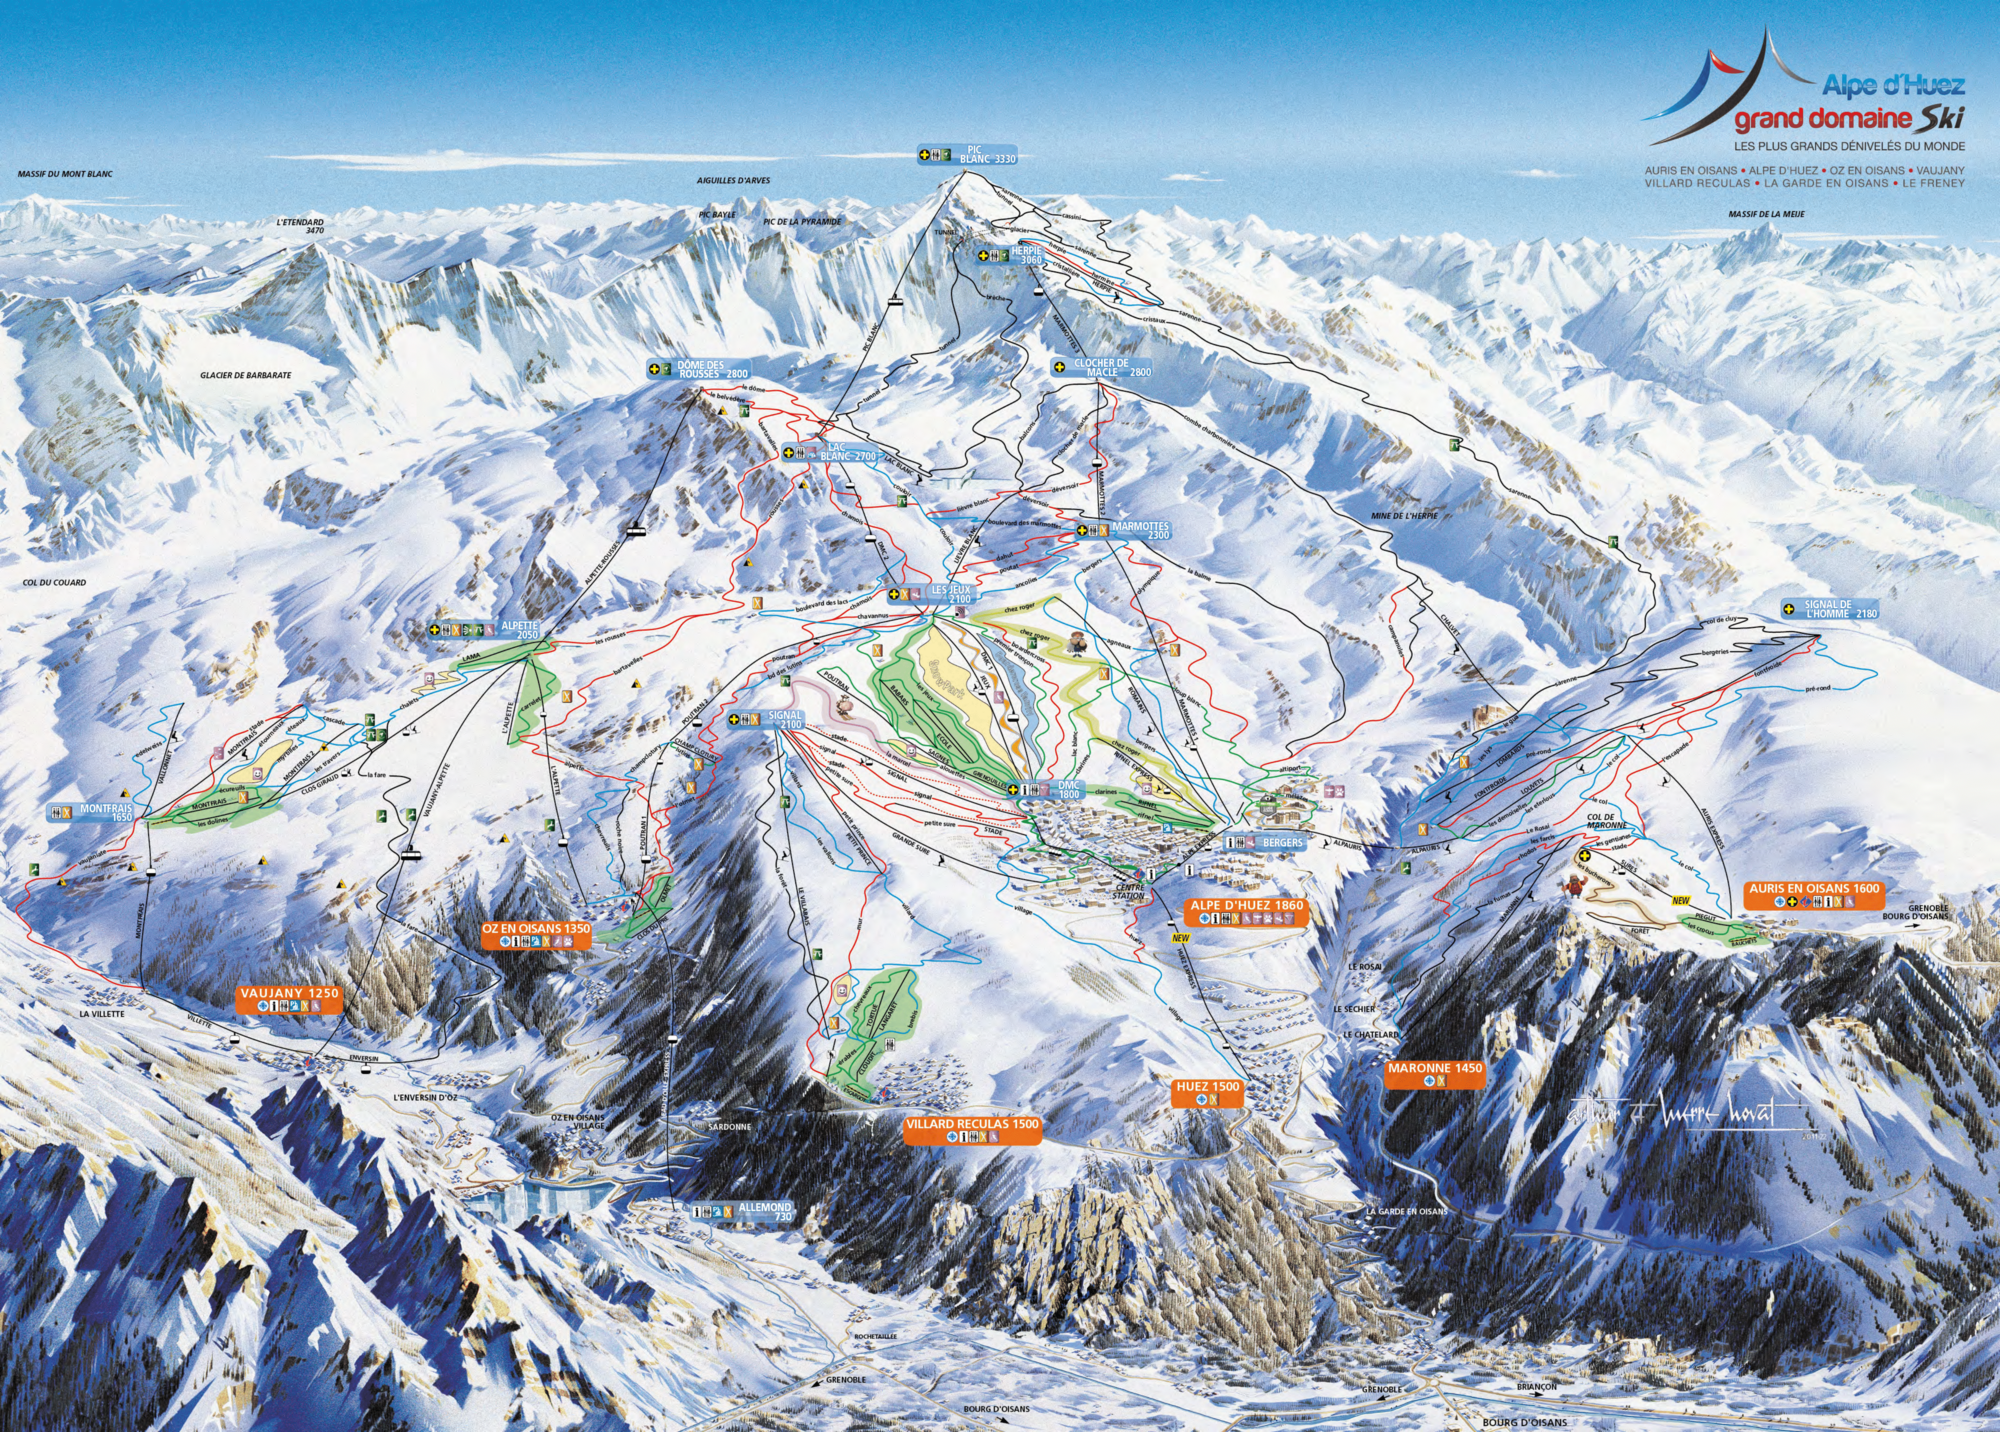 The slopes of the Alpe d&rsquo;Huez ski terrain